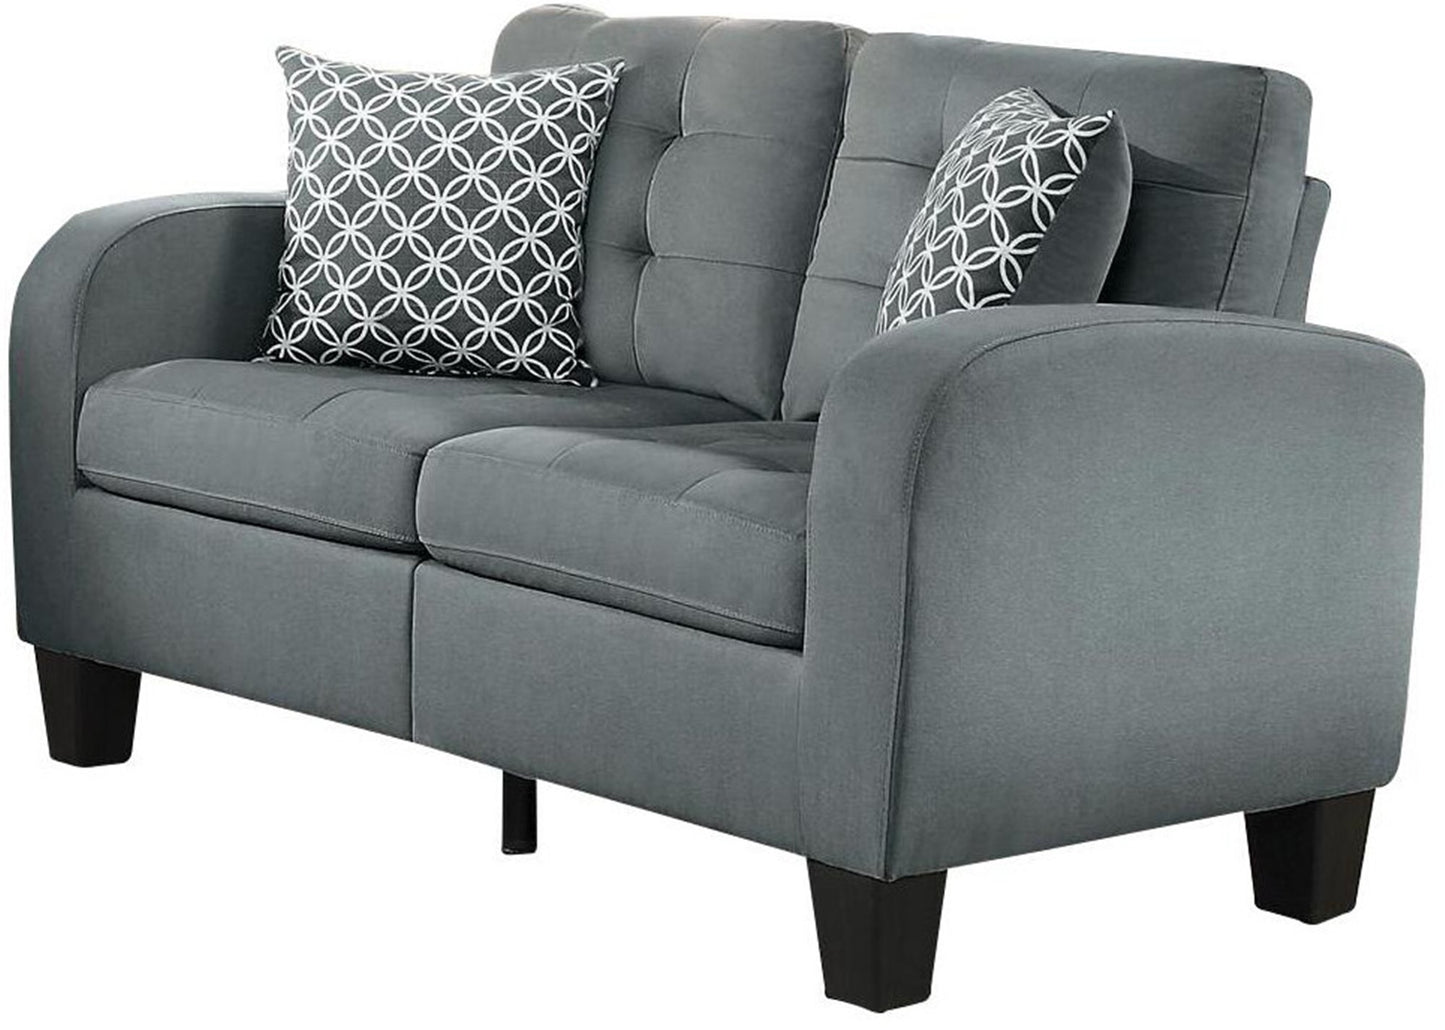 Homelegance Sinclair Park 2PC Sofa & Love Seat in Grey Fabric